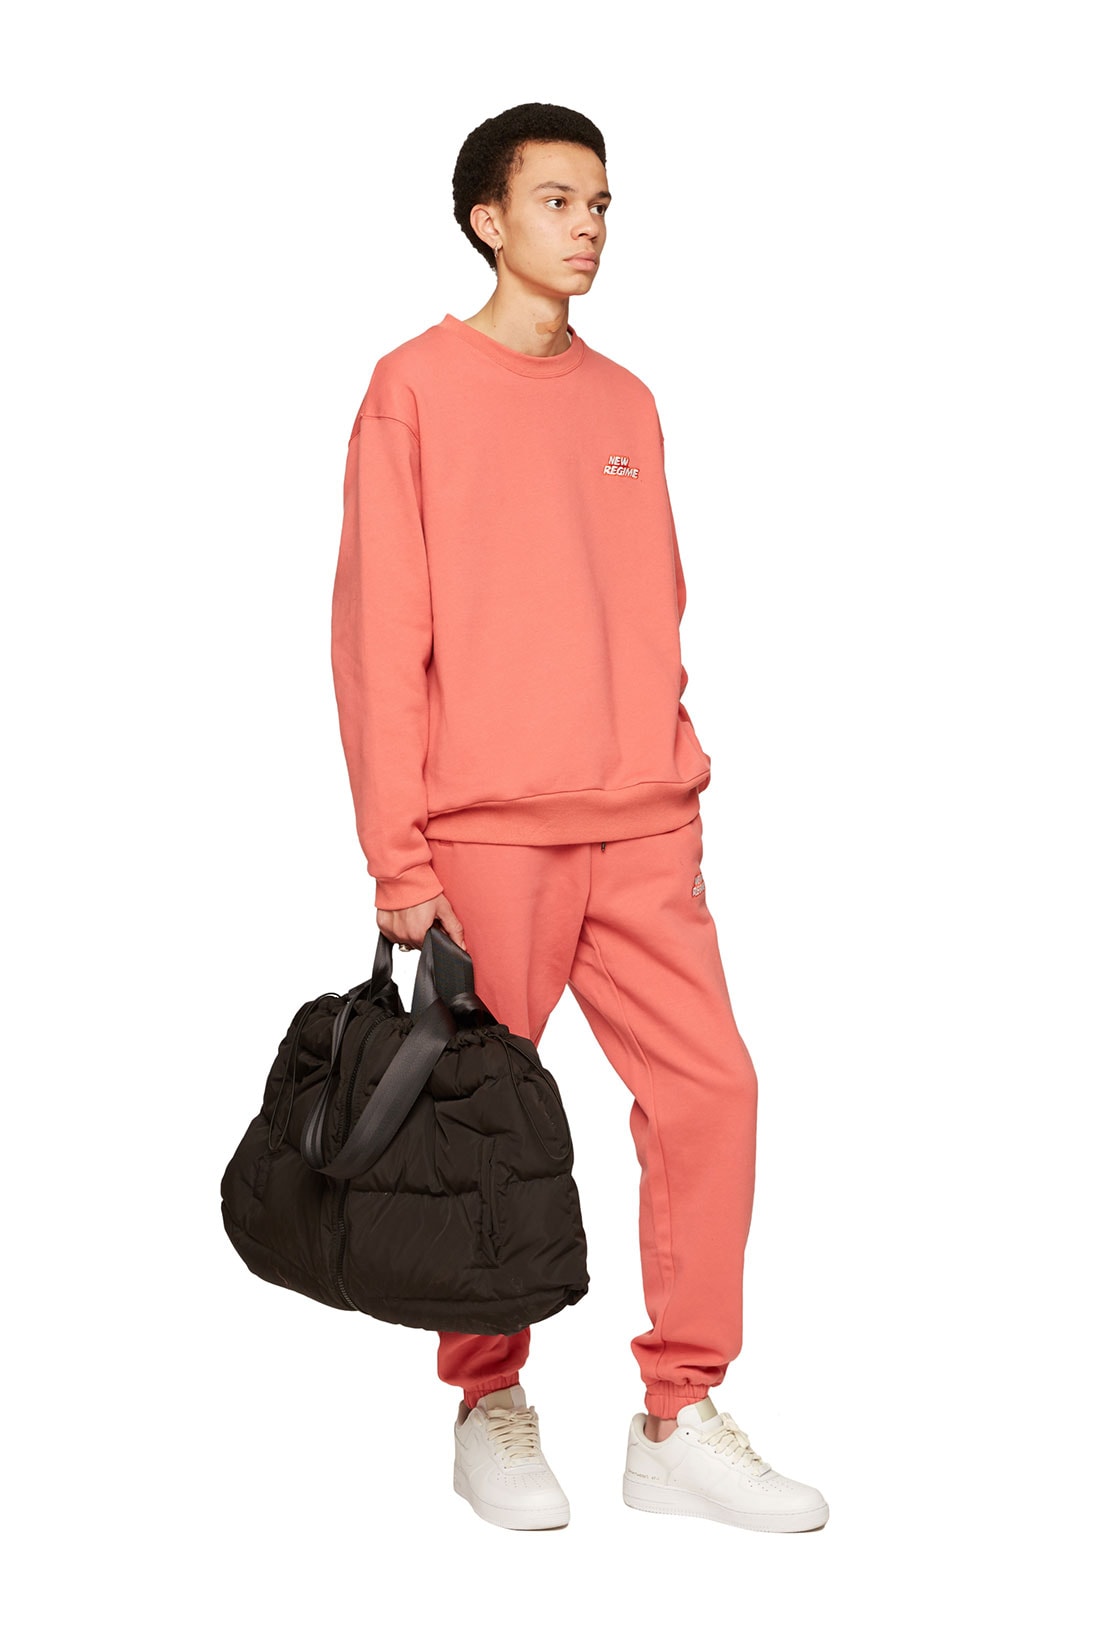 atelier new regime montreal brand fall winter lookbook orange coral sweats sweater pants